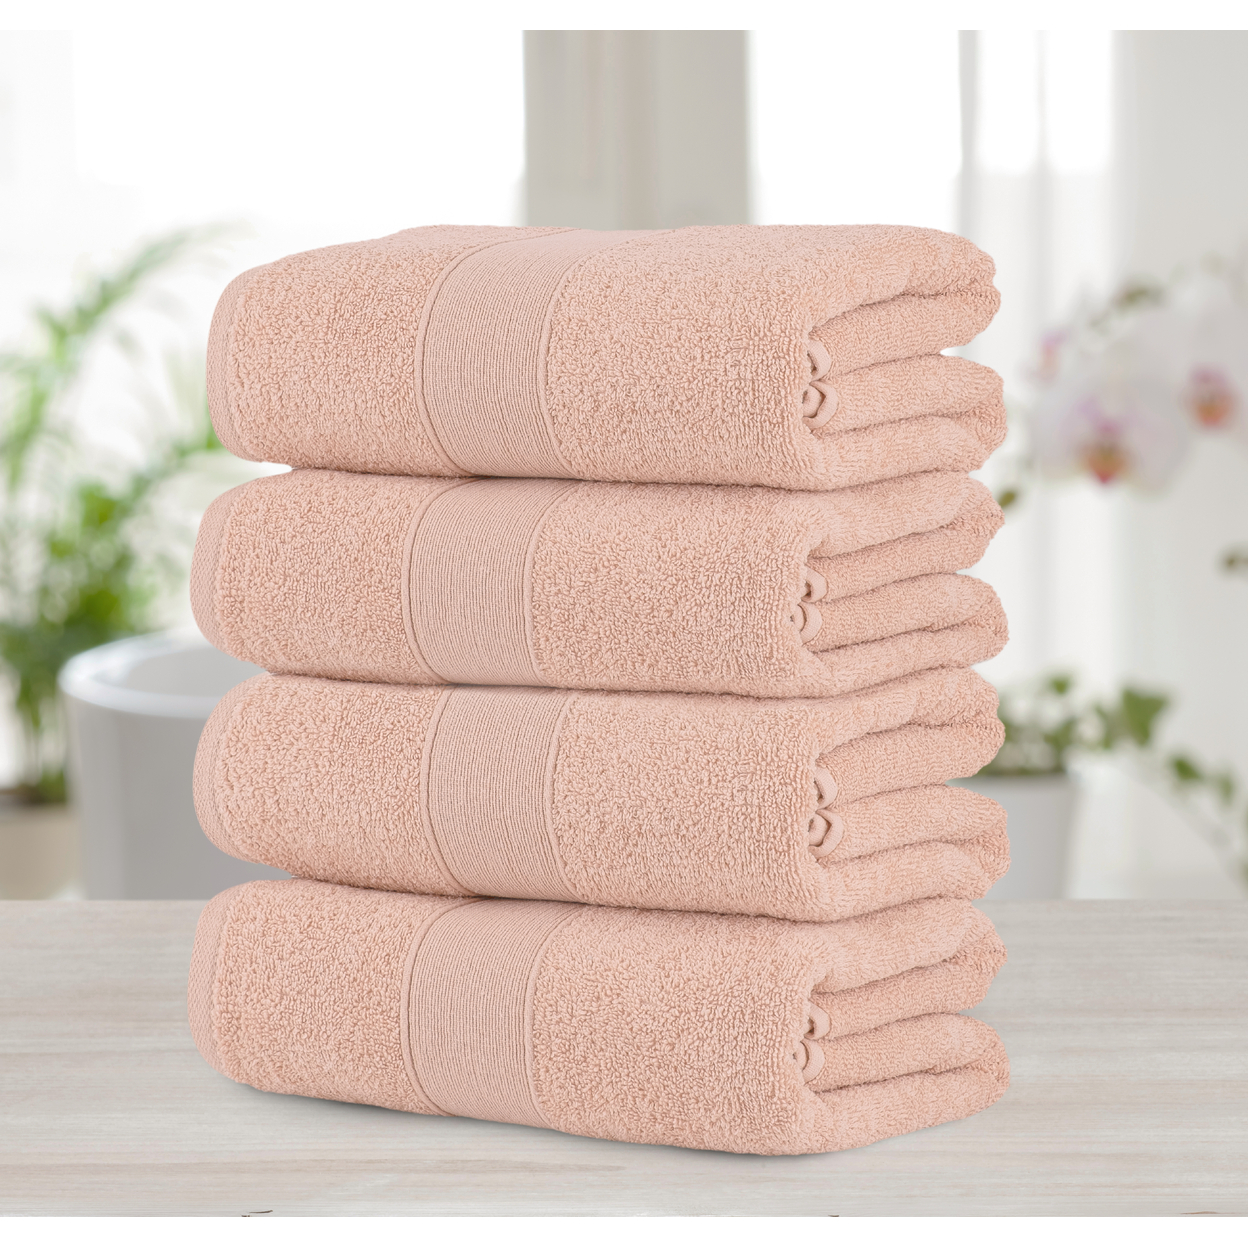 Chic Home Luxurious 4-Piece 100% Pure Turkish Cotton Bath Towels, 30 X 54, Dobby Border Design, OEKO-TEX Certified Set - Rose